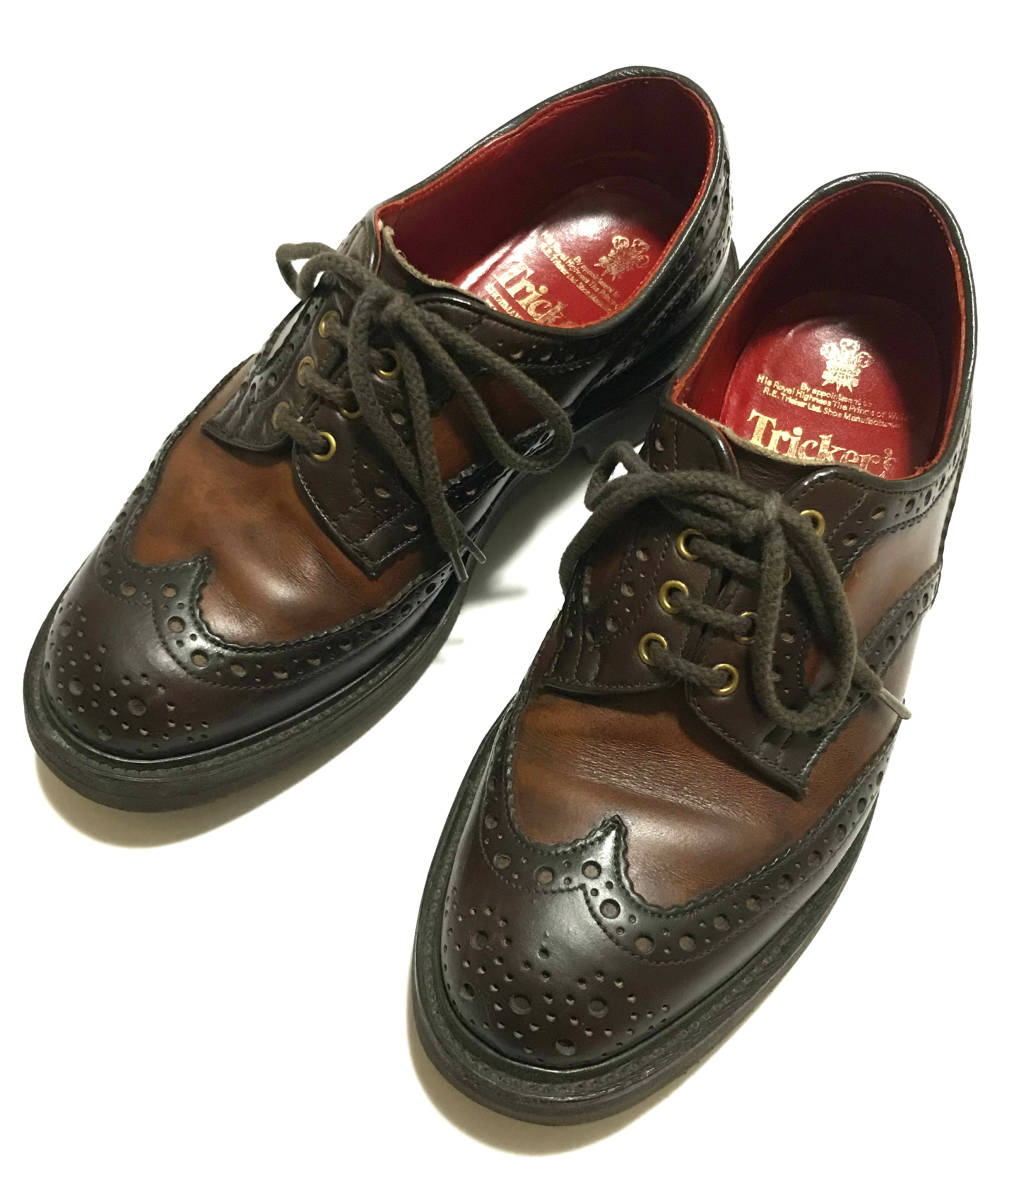 【Tricker’s】 トリッカーズ レザーシューズ 6 革靴